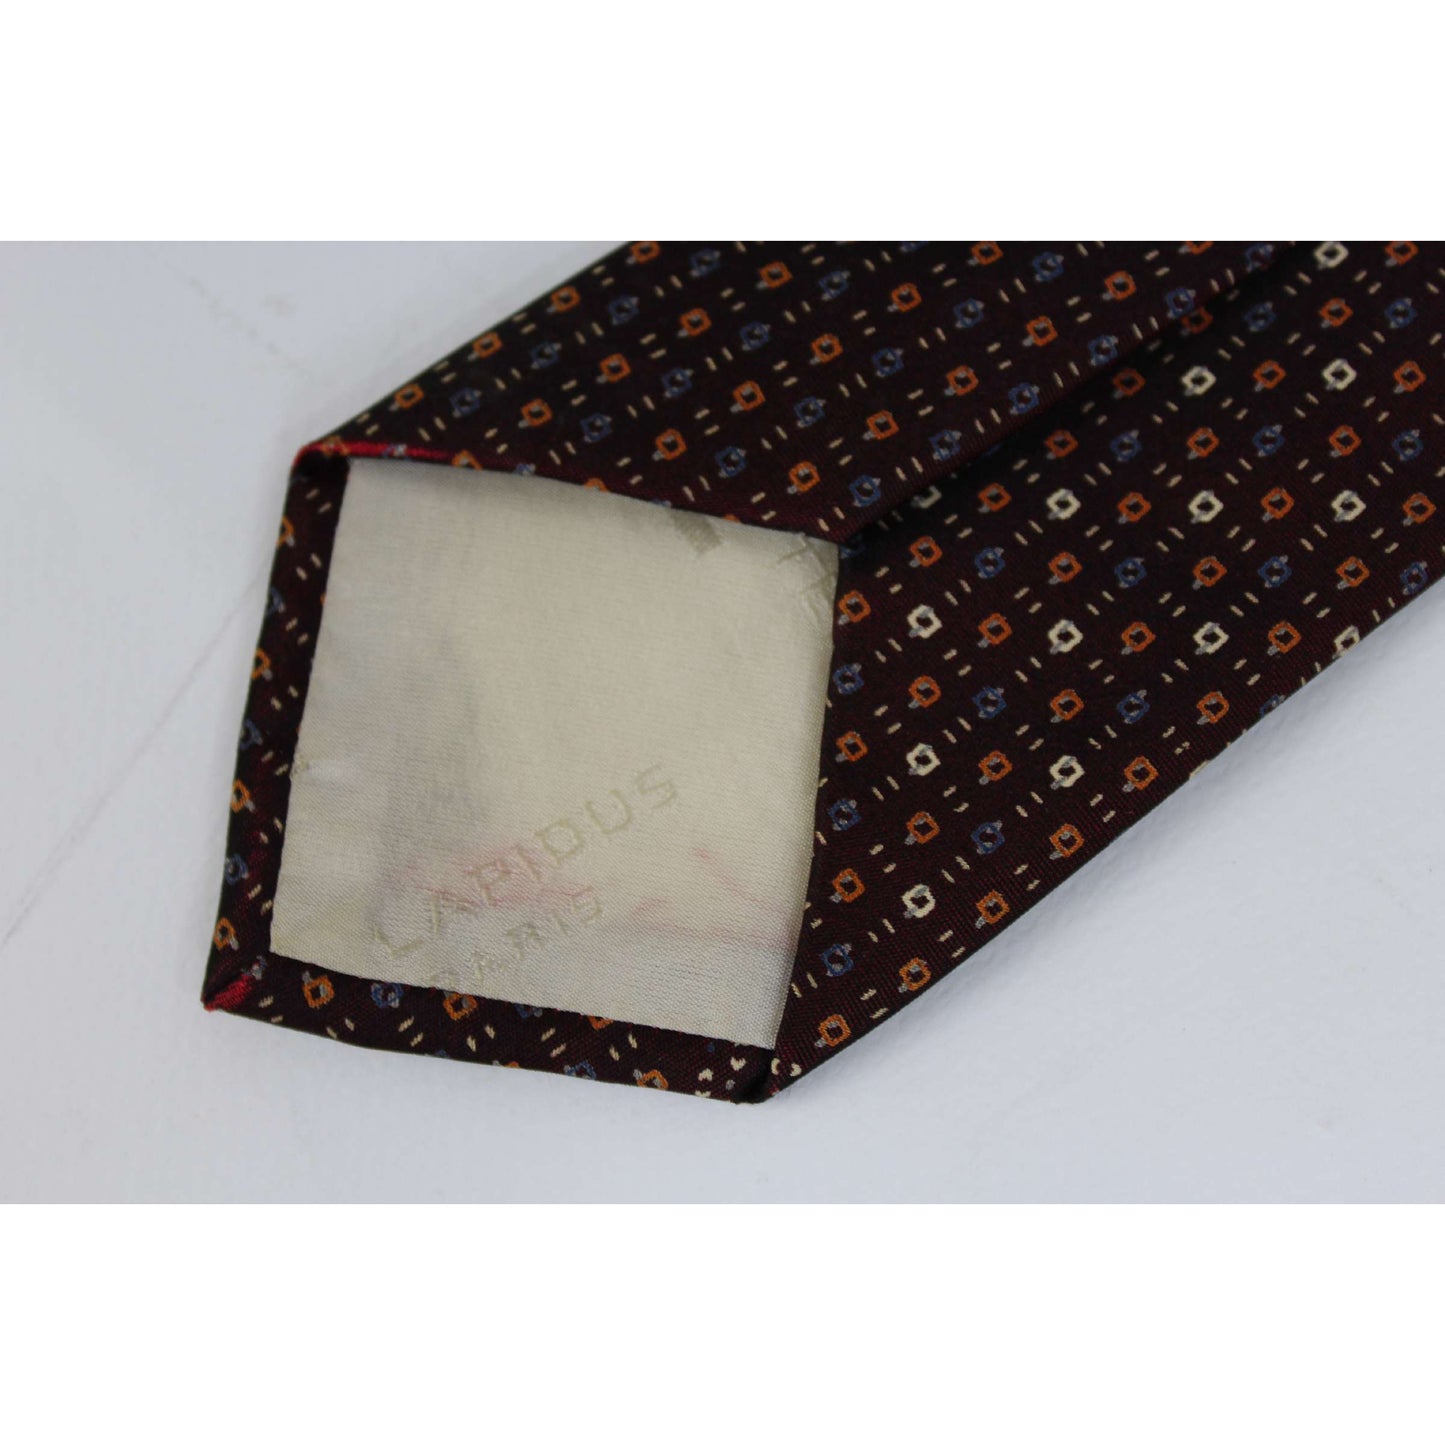 Ted Lapidus Silk Vintage Burgundy Monogram Tie